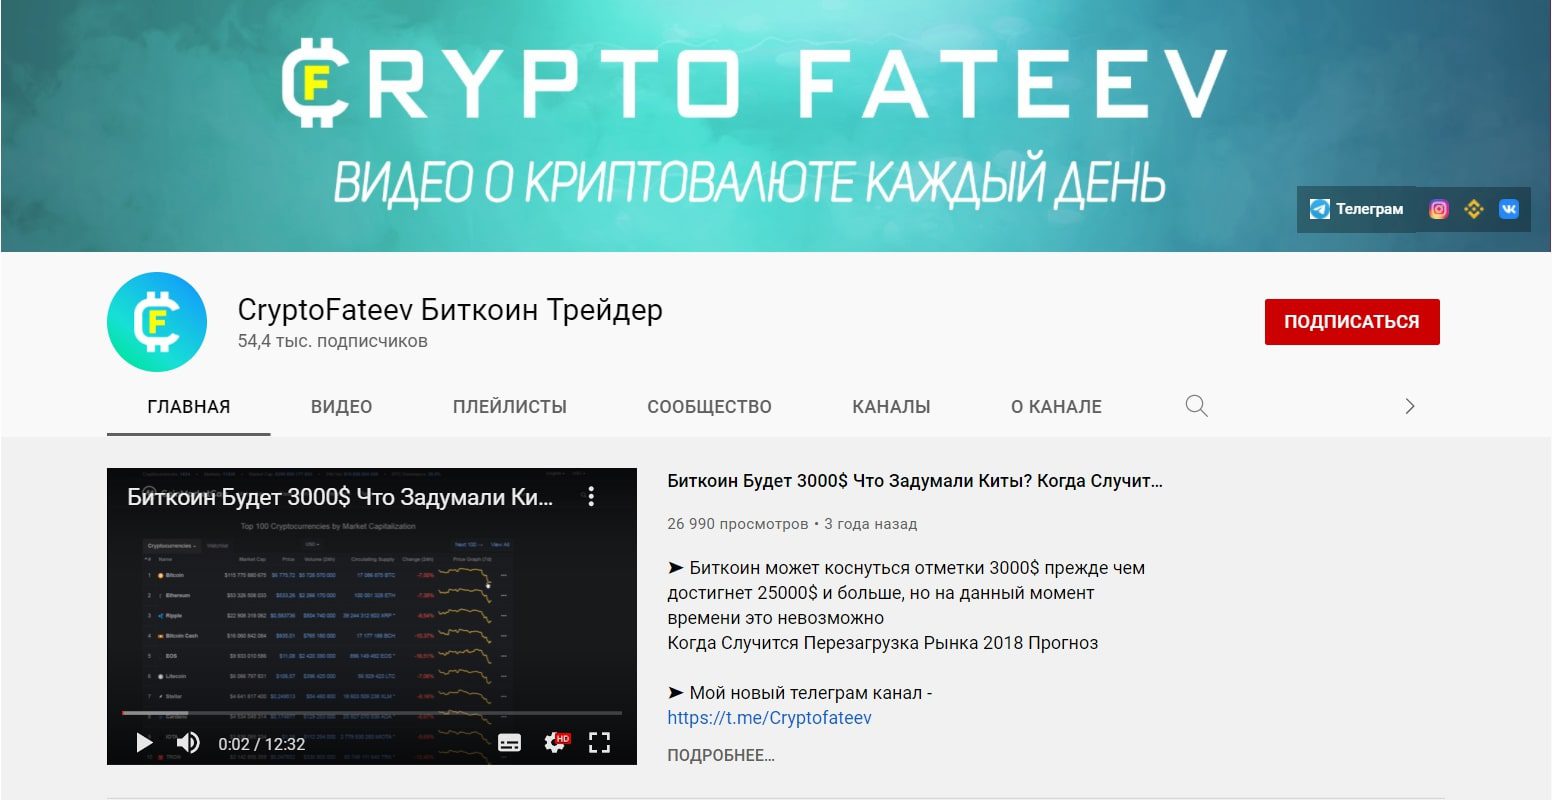 Ютуб канал CryptoFateev